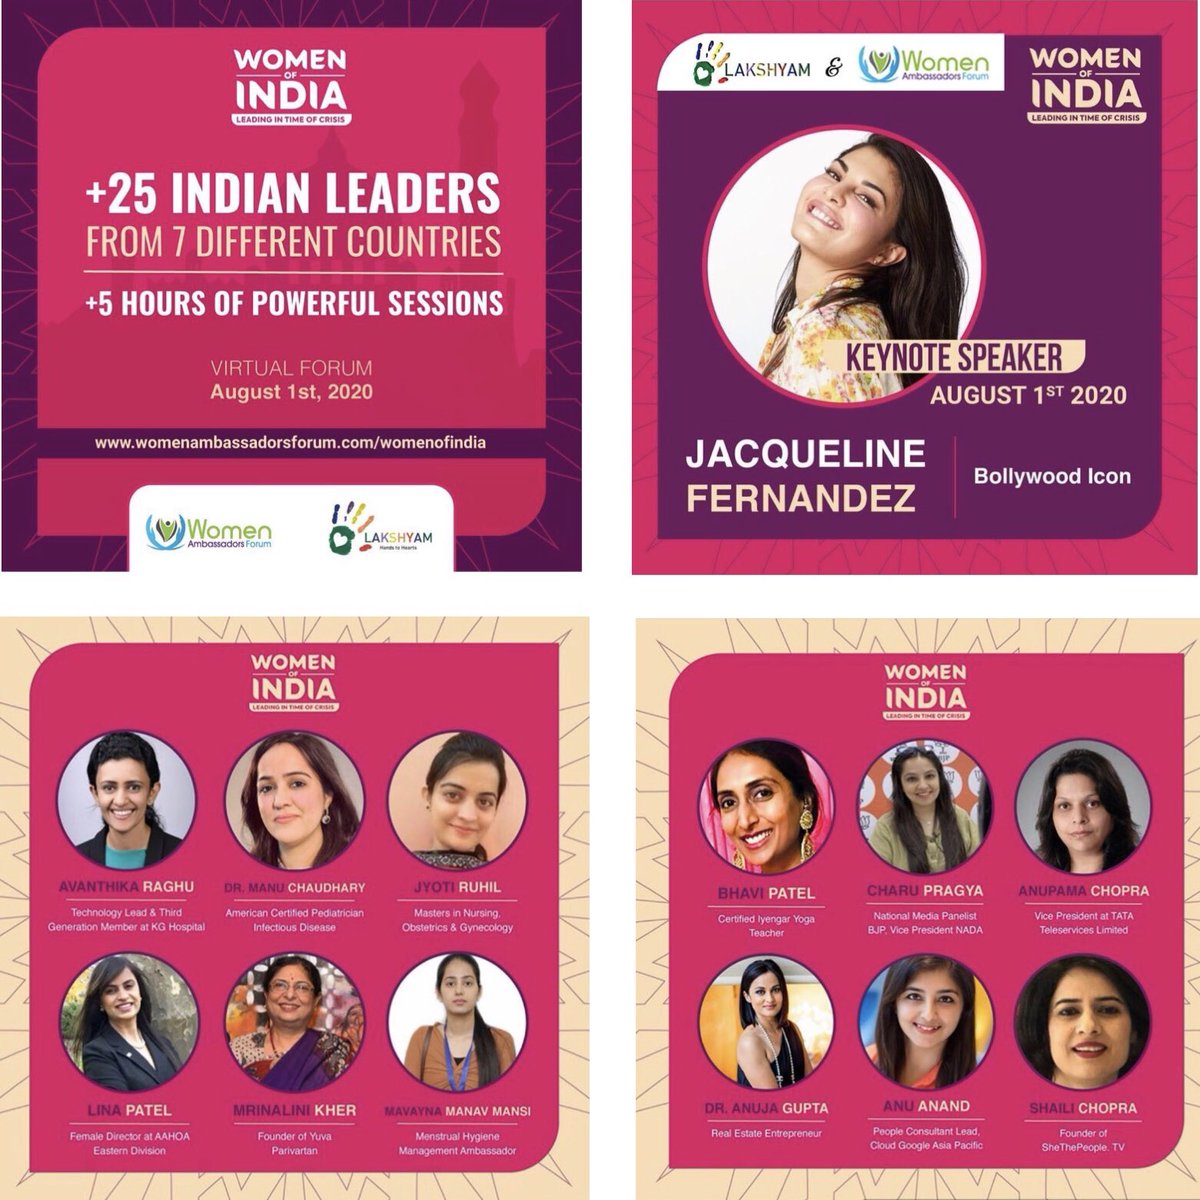 Women of India Leading in Time of Crisis,
@CharuPragya @Asli_Jacqueline @lakshyamngo
#womenempowerment #womenempoweringwomen #indianwomen #virtualsummit2020 #socialentrepreneurship #socialenterprises #bethechange #youngchangemakers